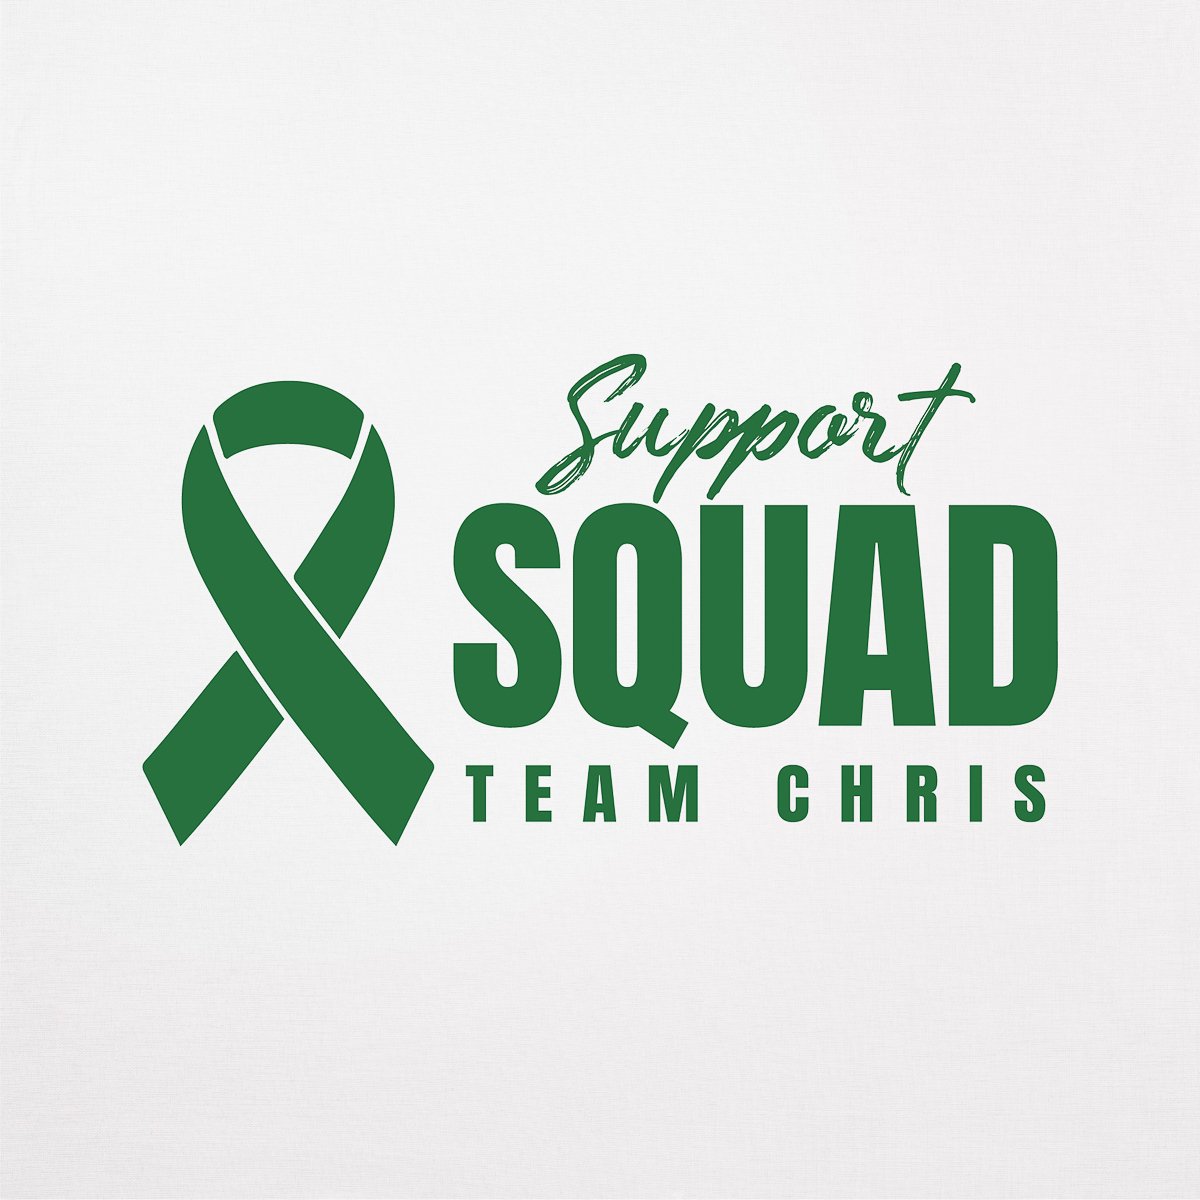 65_team_chris_logo.jpg